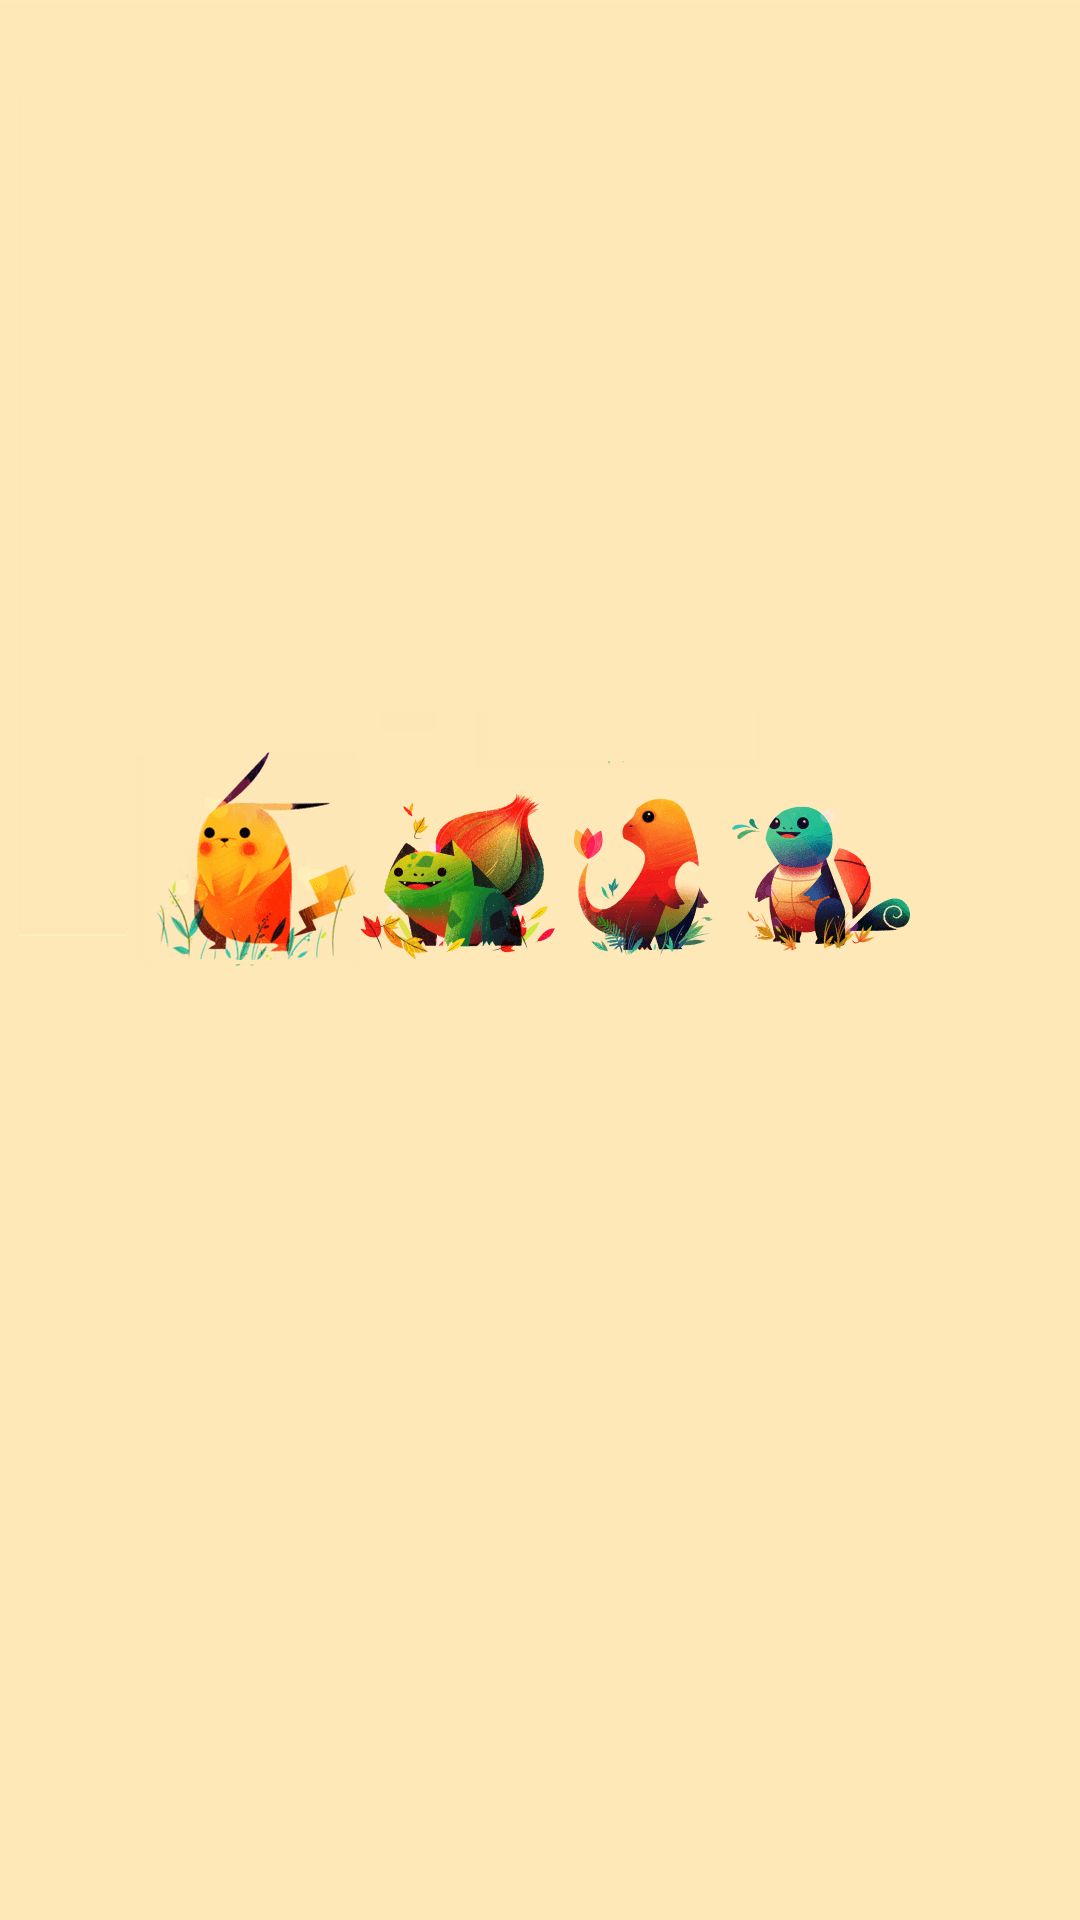 IPhone wallpaper with a group of cartoon birds. - Pikachu, Pokemon